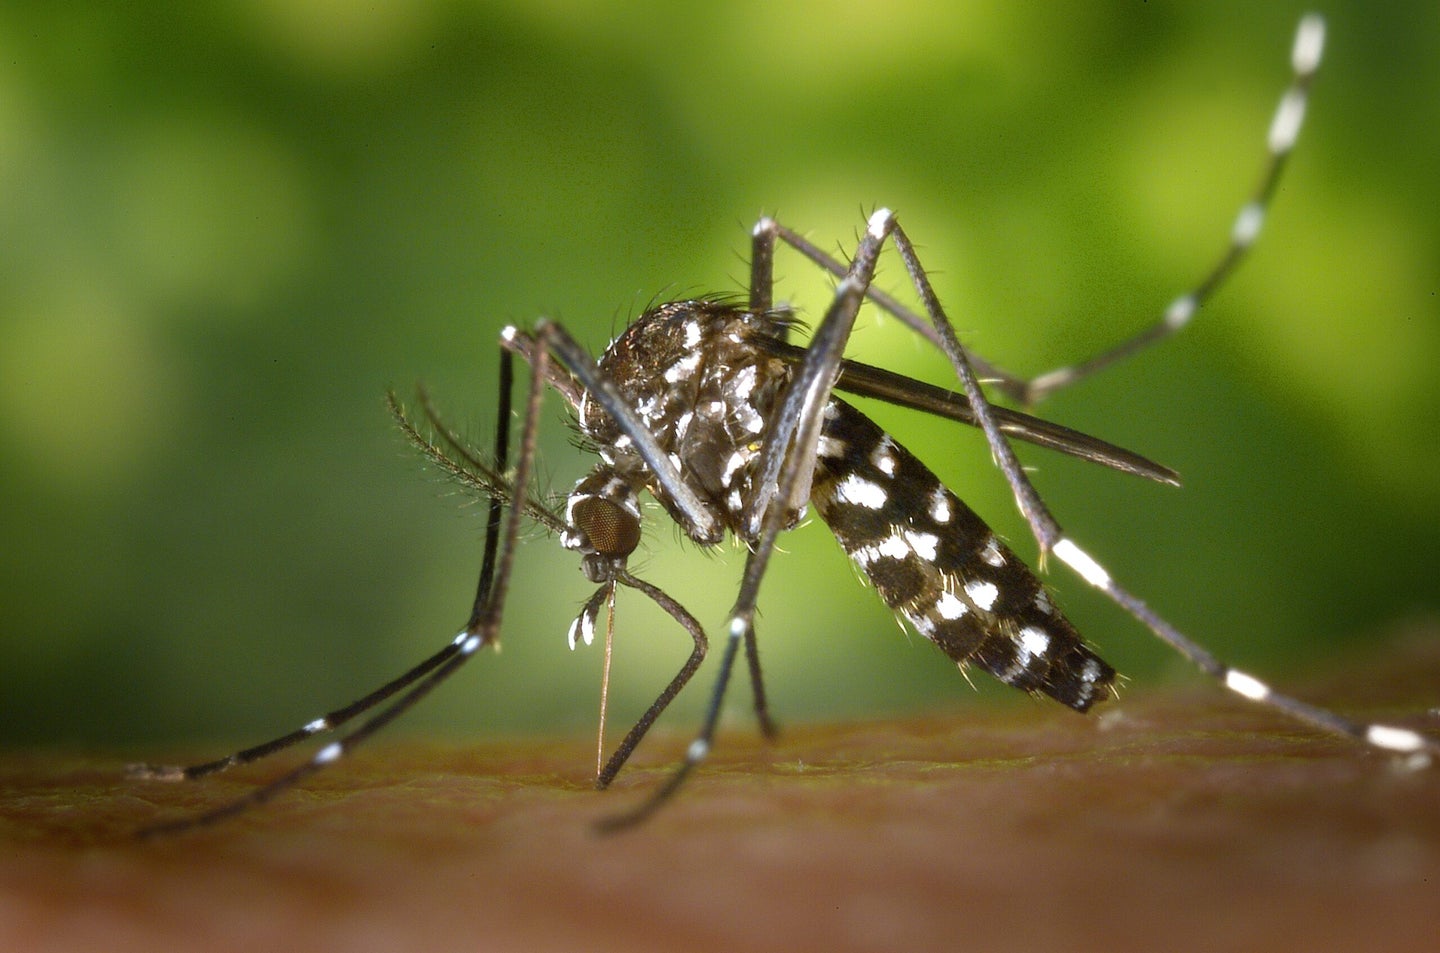 mosquito biting a human limb